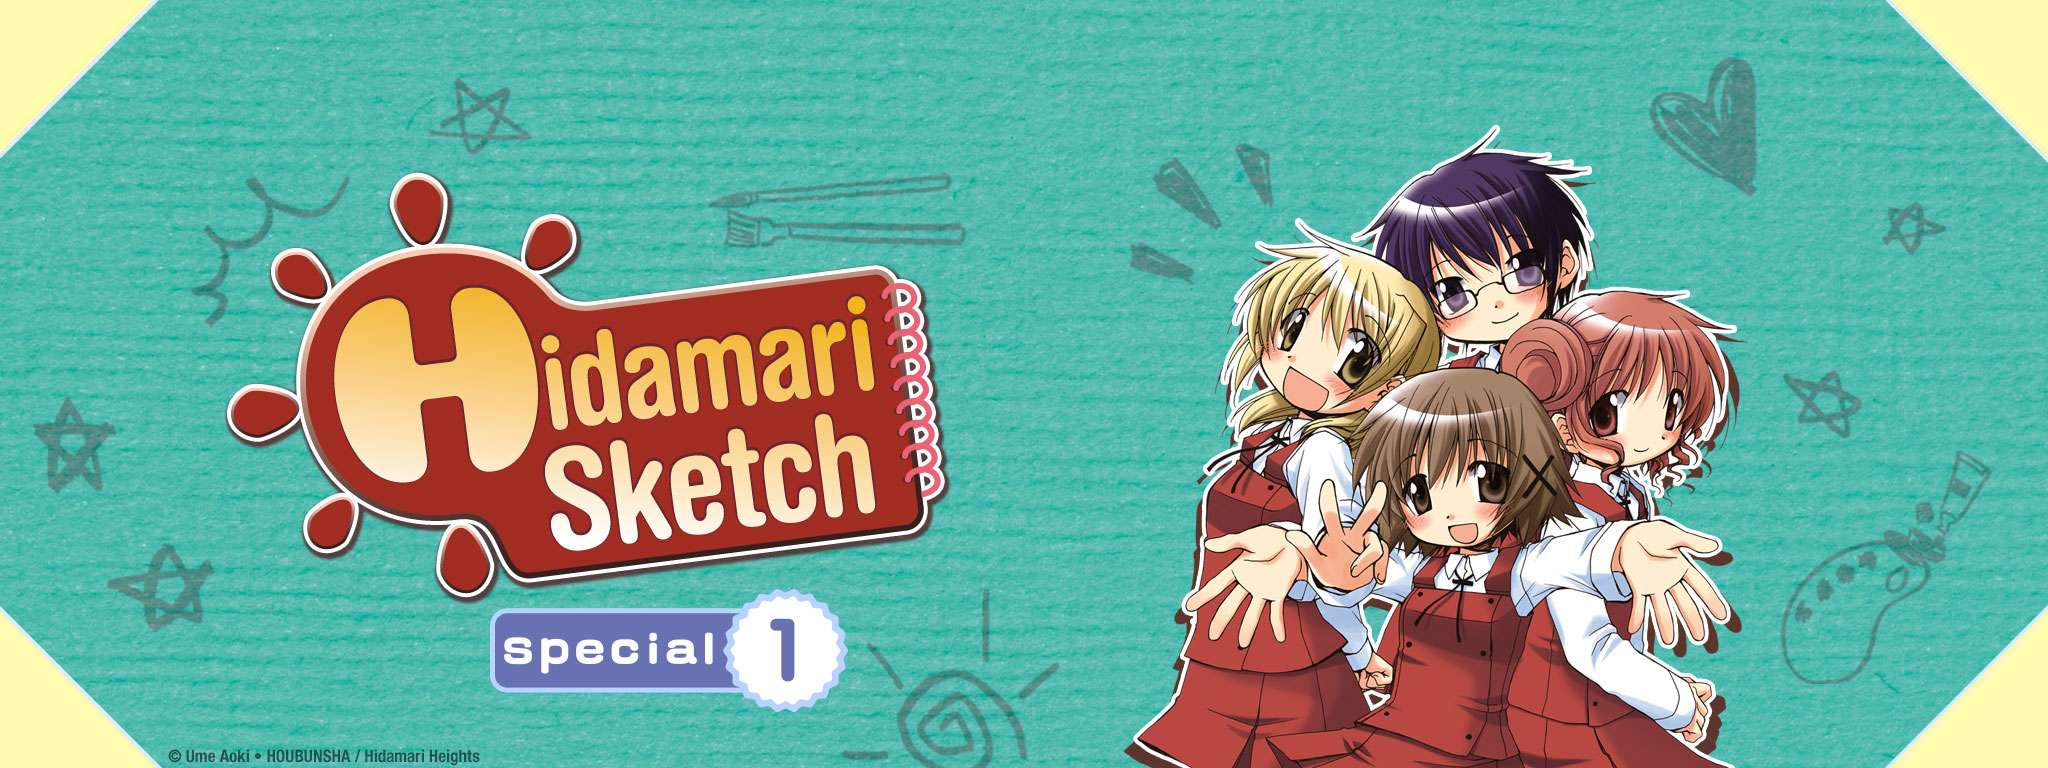 Title Art for Hidamari Sketch OVA 1